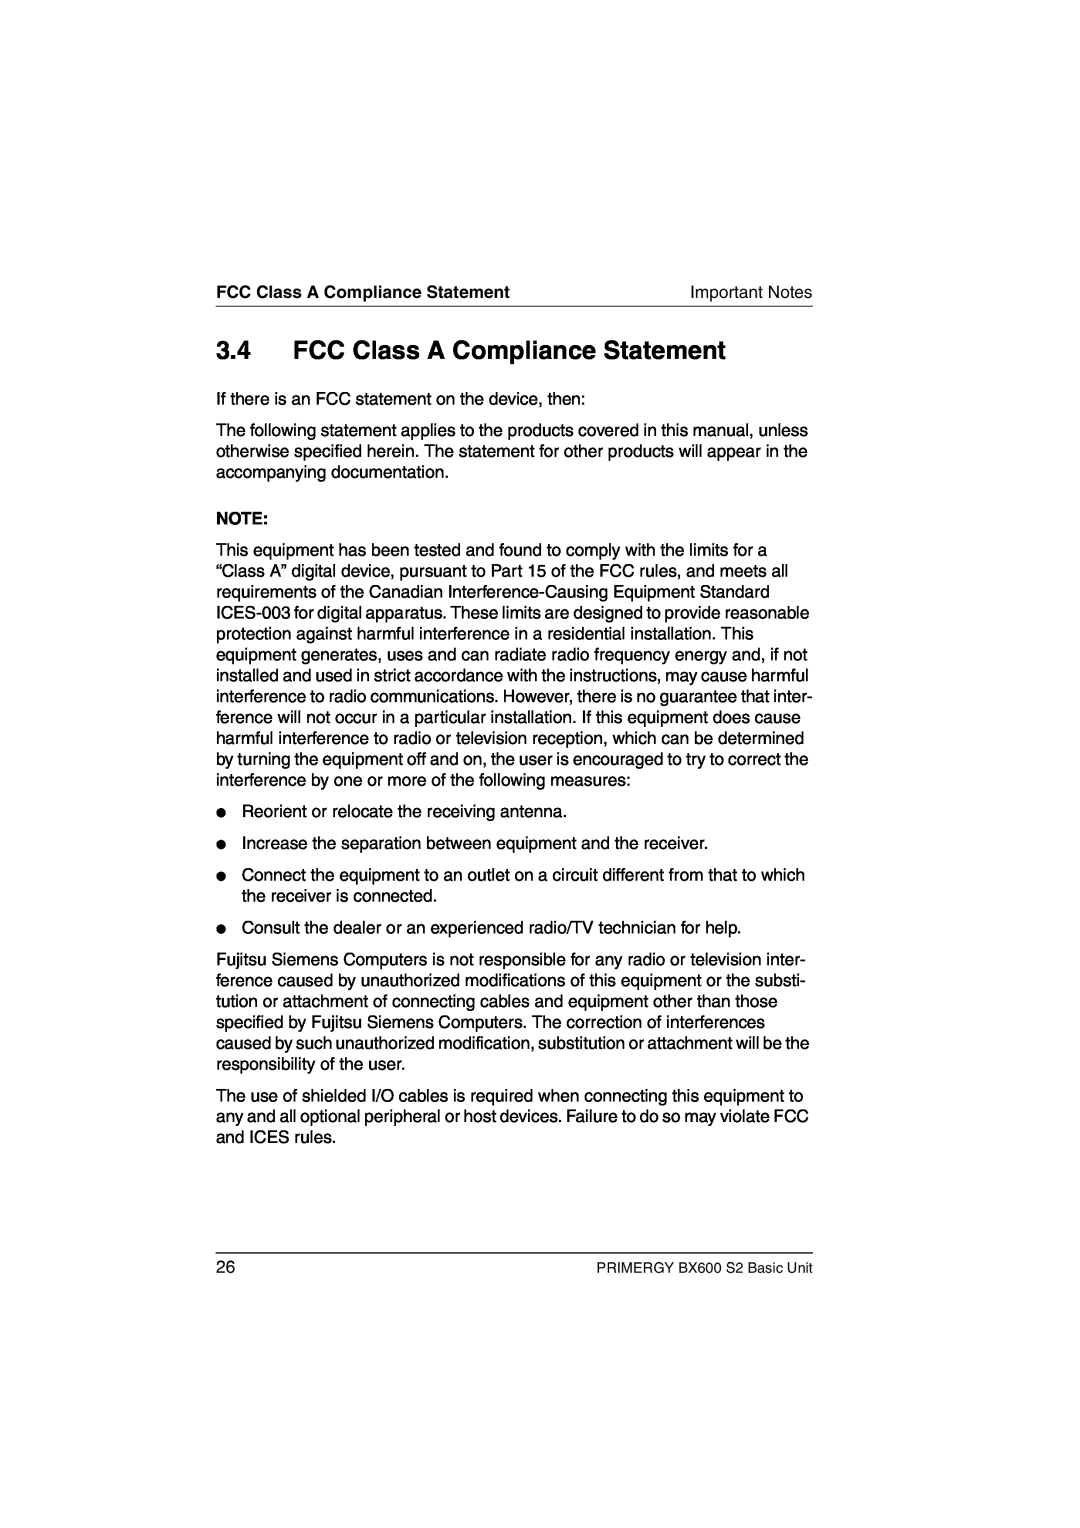 Fujitsu BX600 S2 manual FCC Class A Compliance Statement 